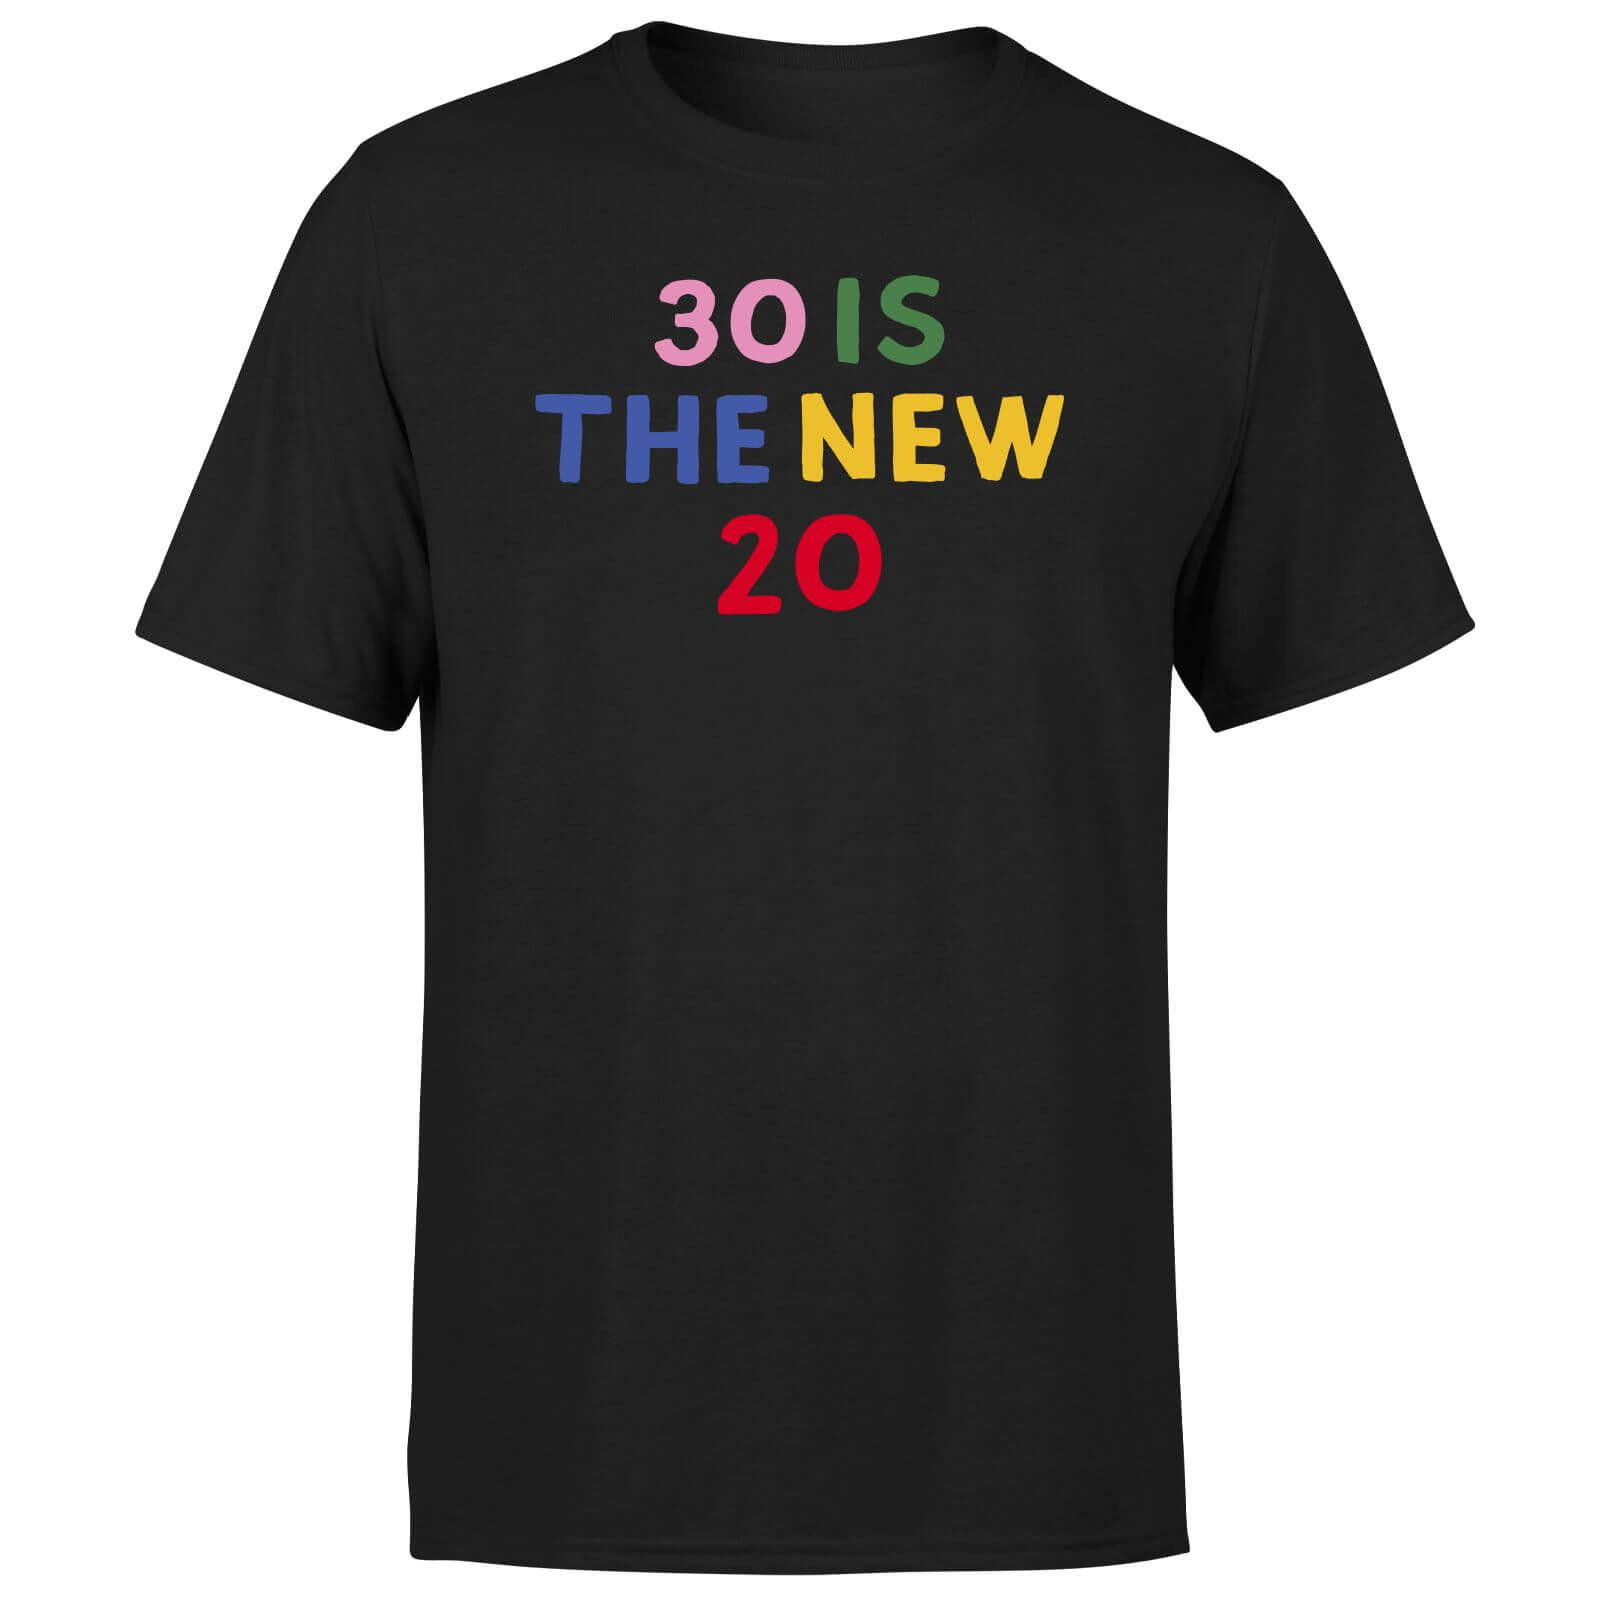 30 Is The New 20 Men's T-Shirt - Black - XS - Black